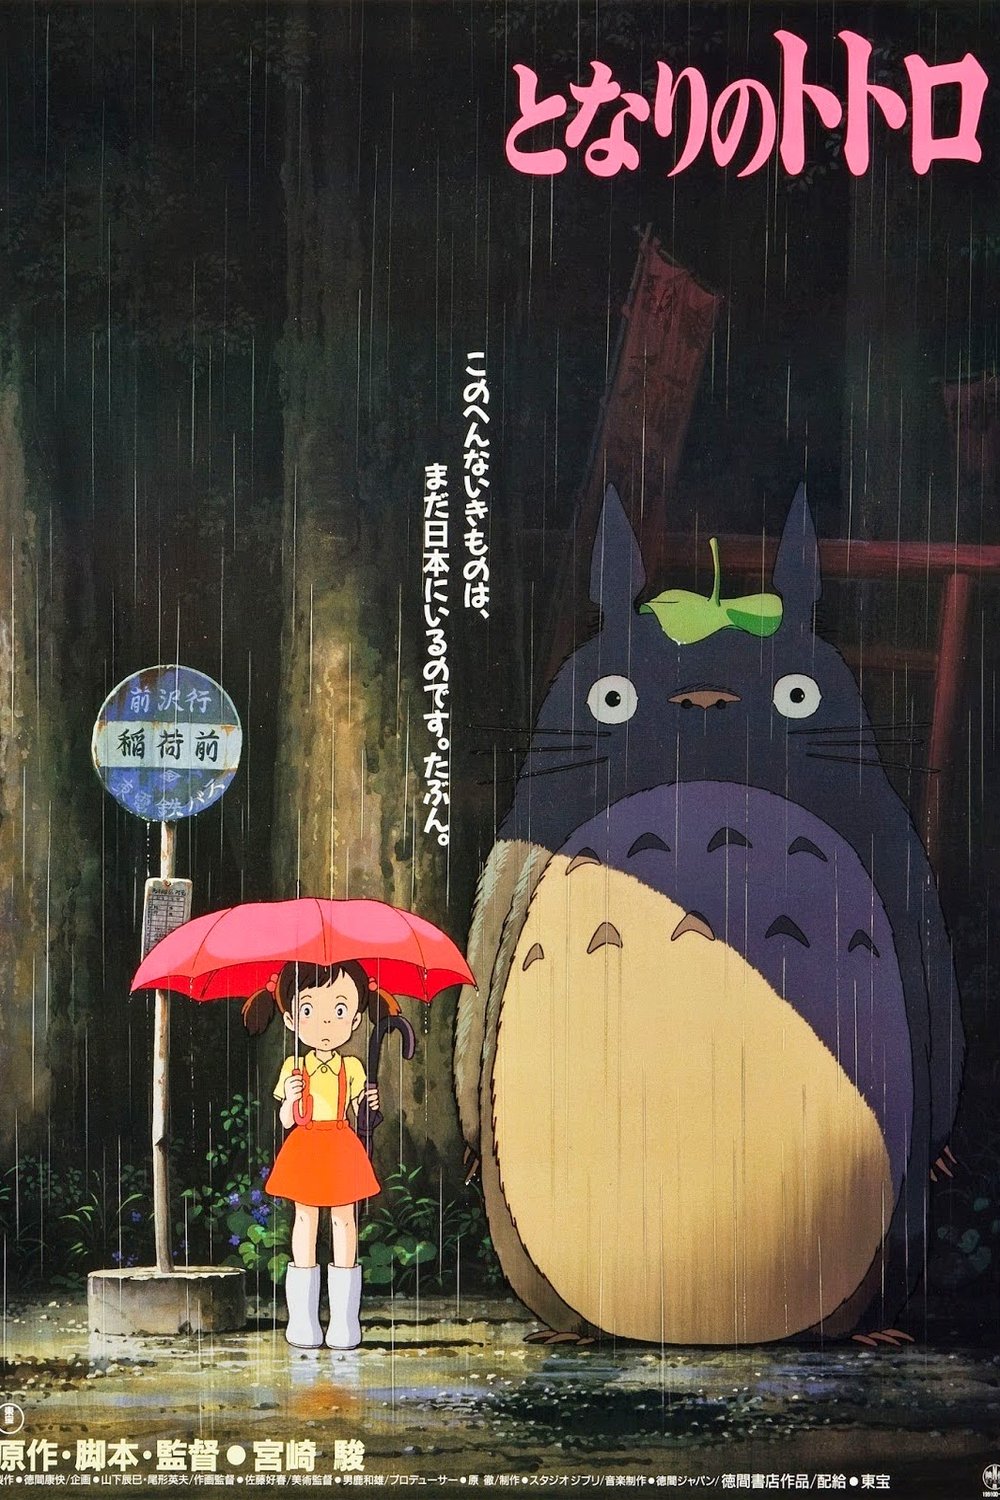 L'affiche originale du film Tonari no Totoro en japonais